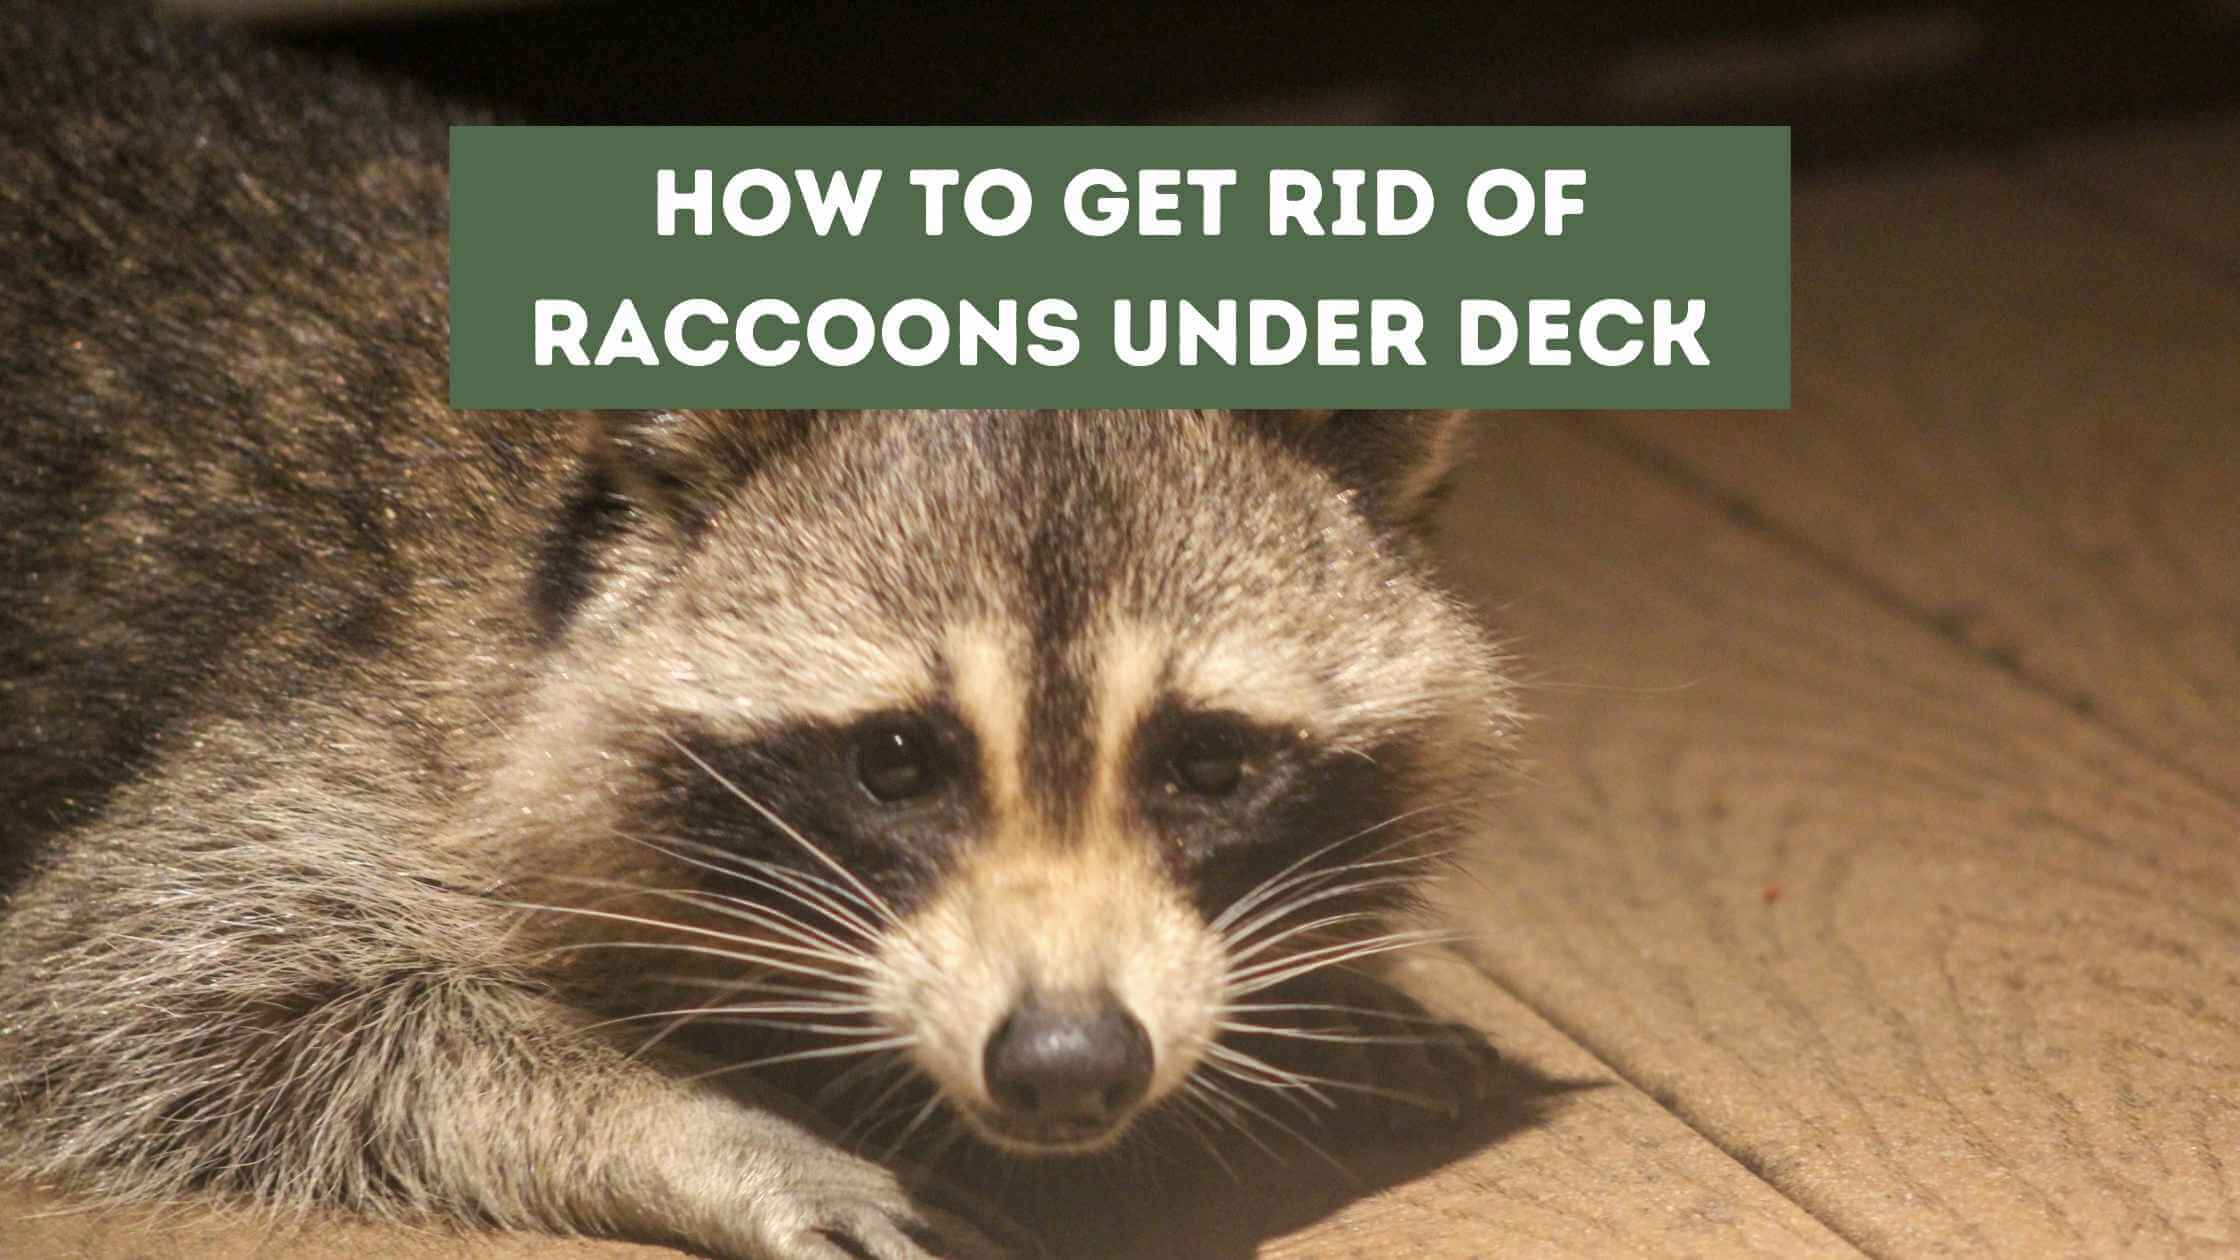 Get Rid of Raccoons Under Deck